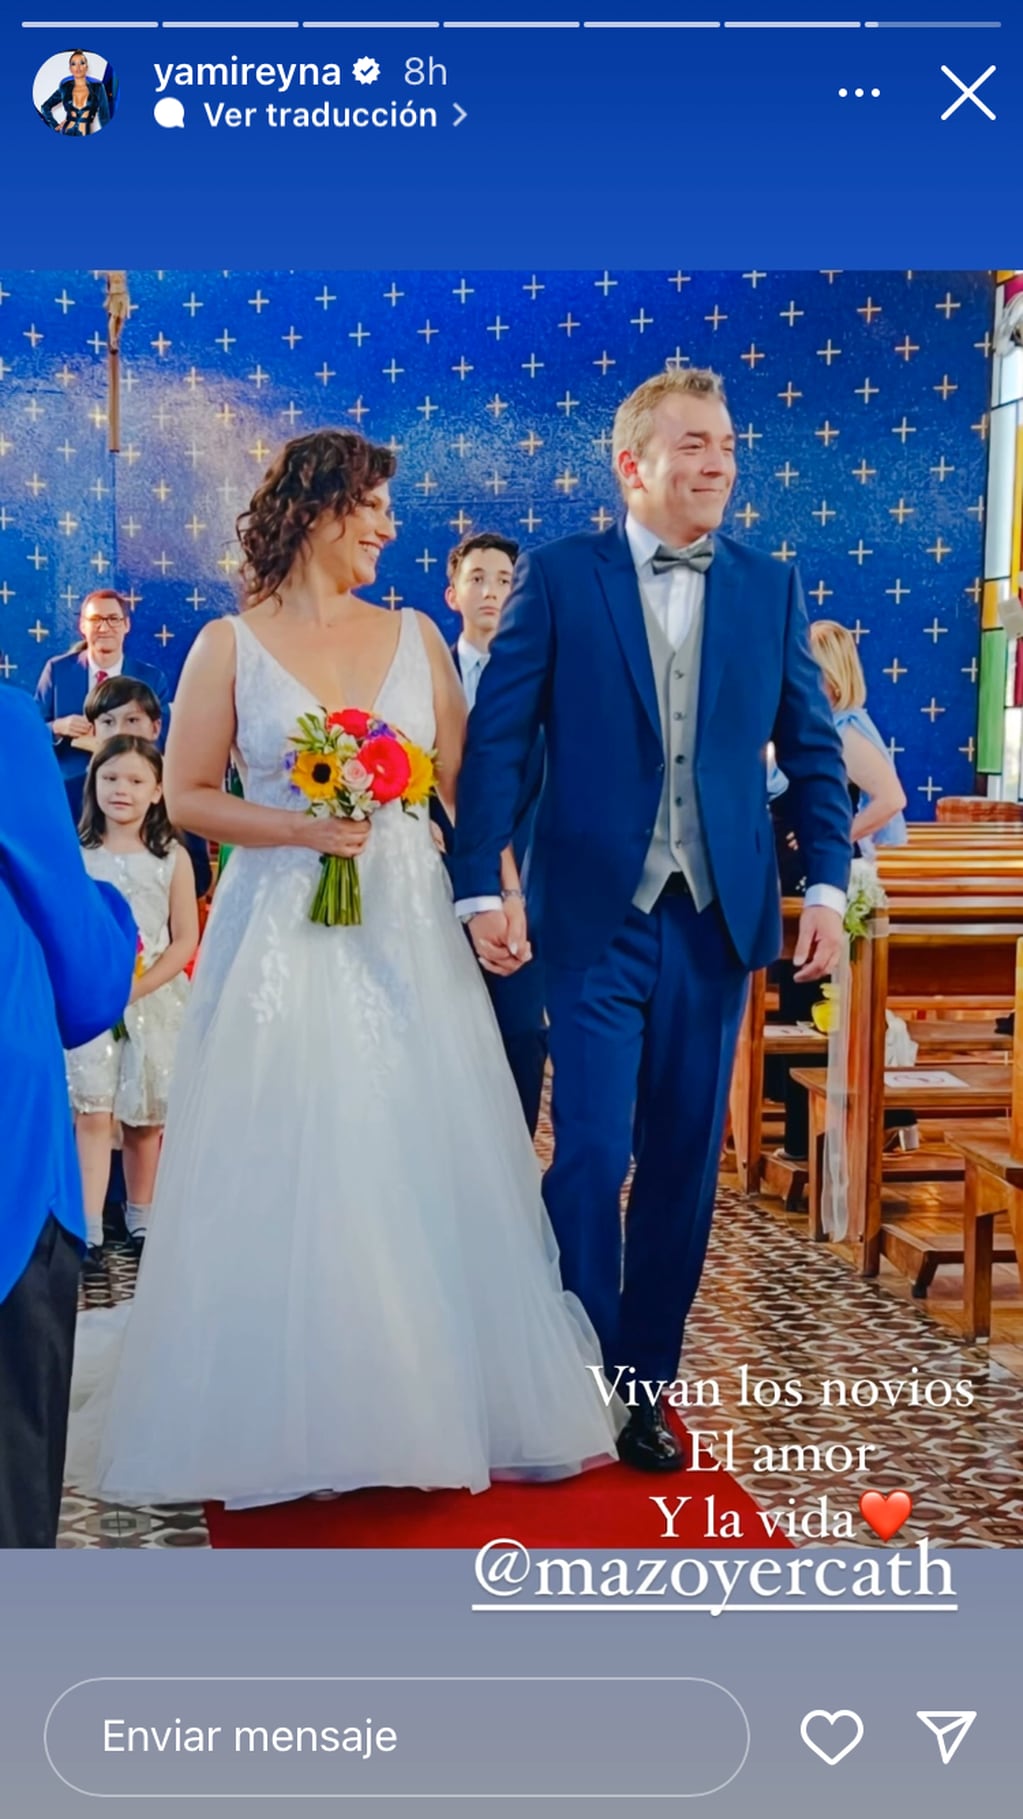 Catherine Mazoyer contrajo matrimonio en una íntima ceremonia